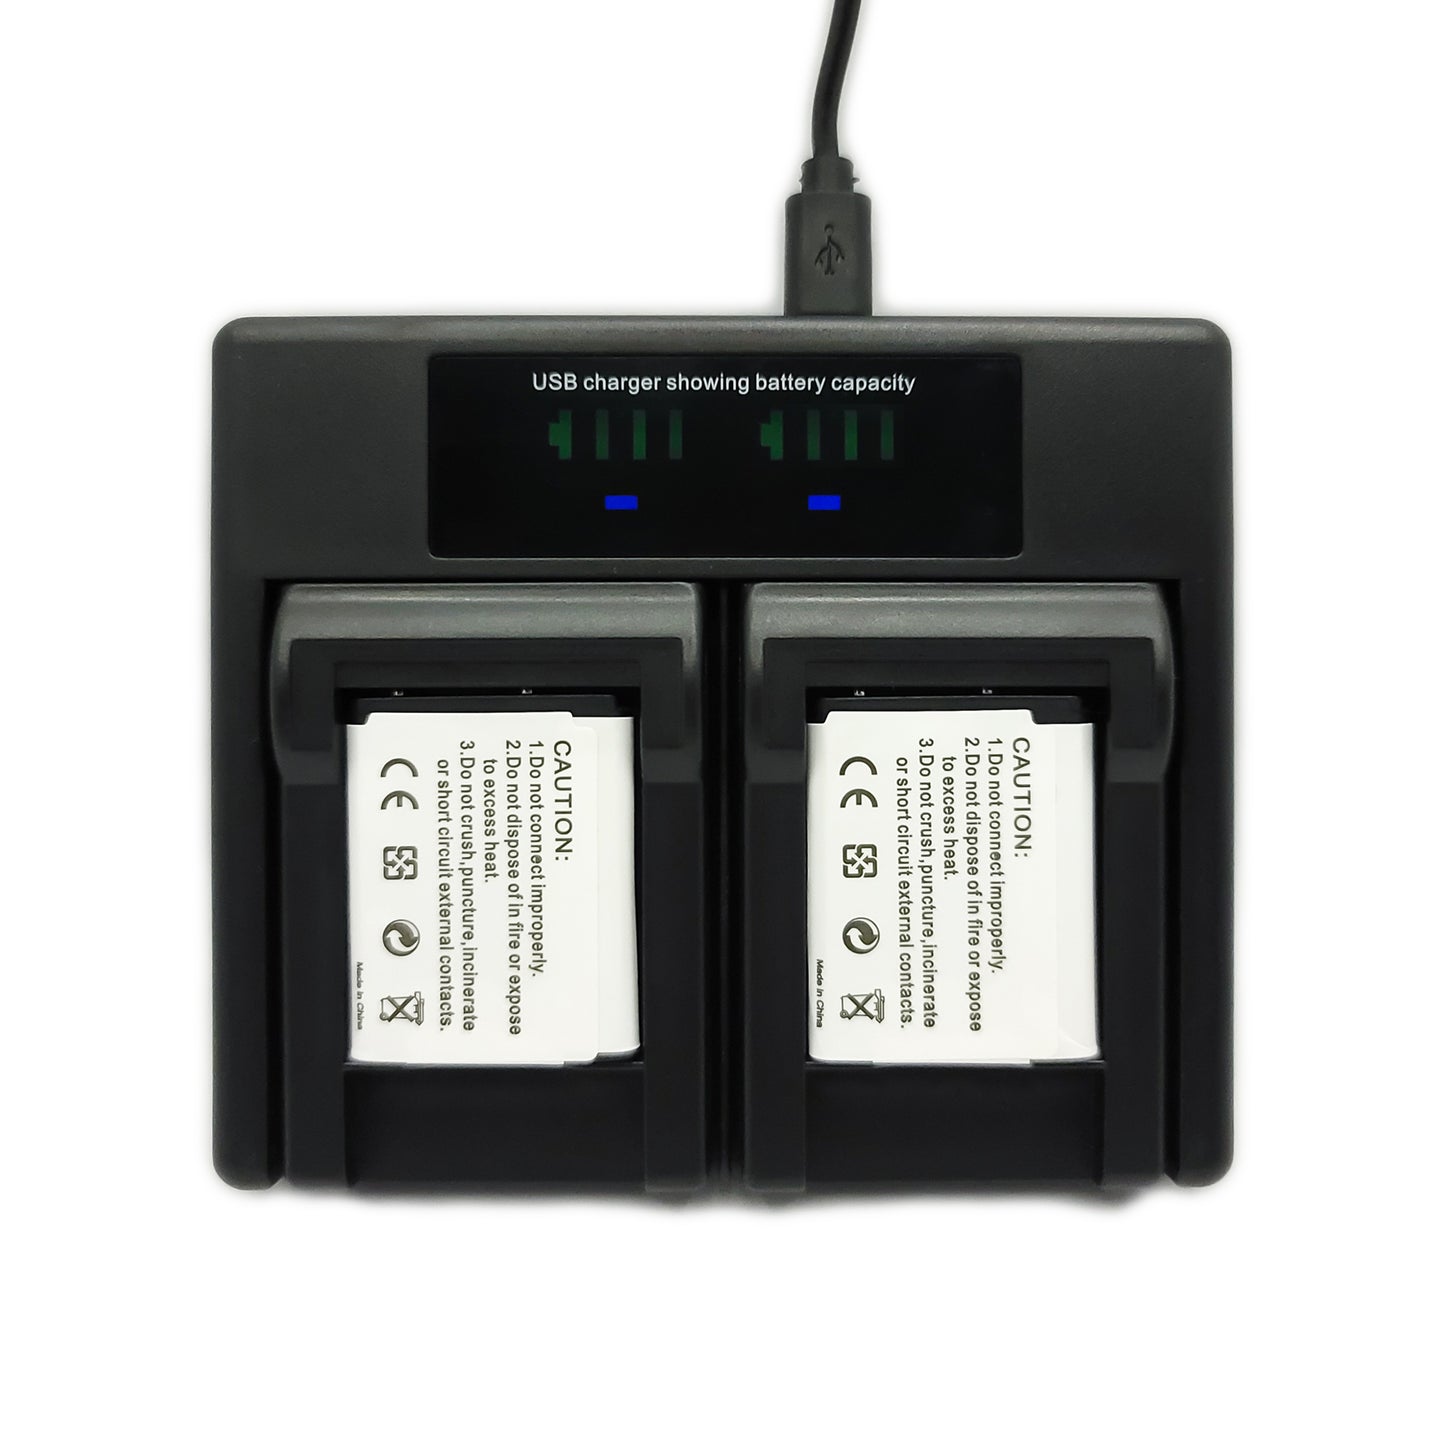 Hridz EN-EL19 Battery Charger For Nikon Coolpix S Series Camera Batteries